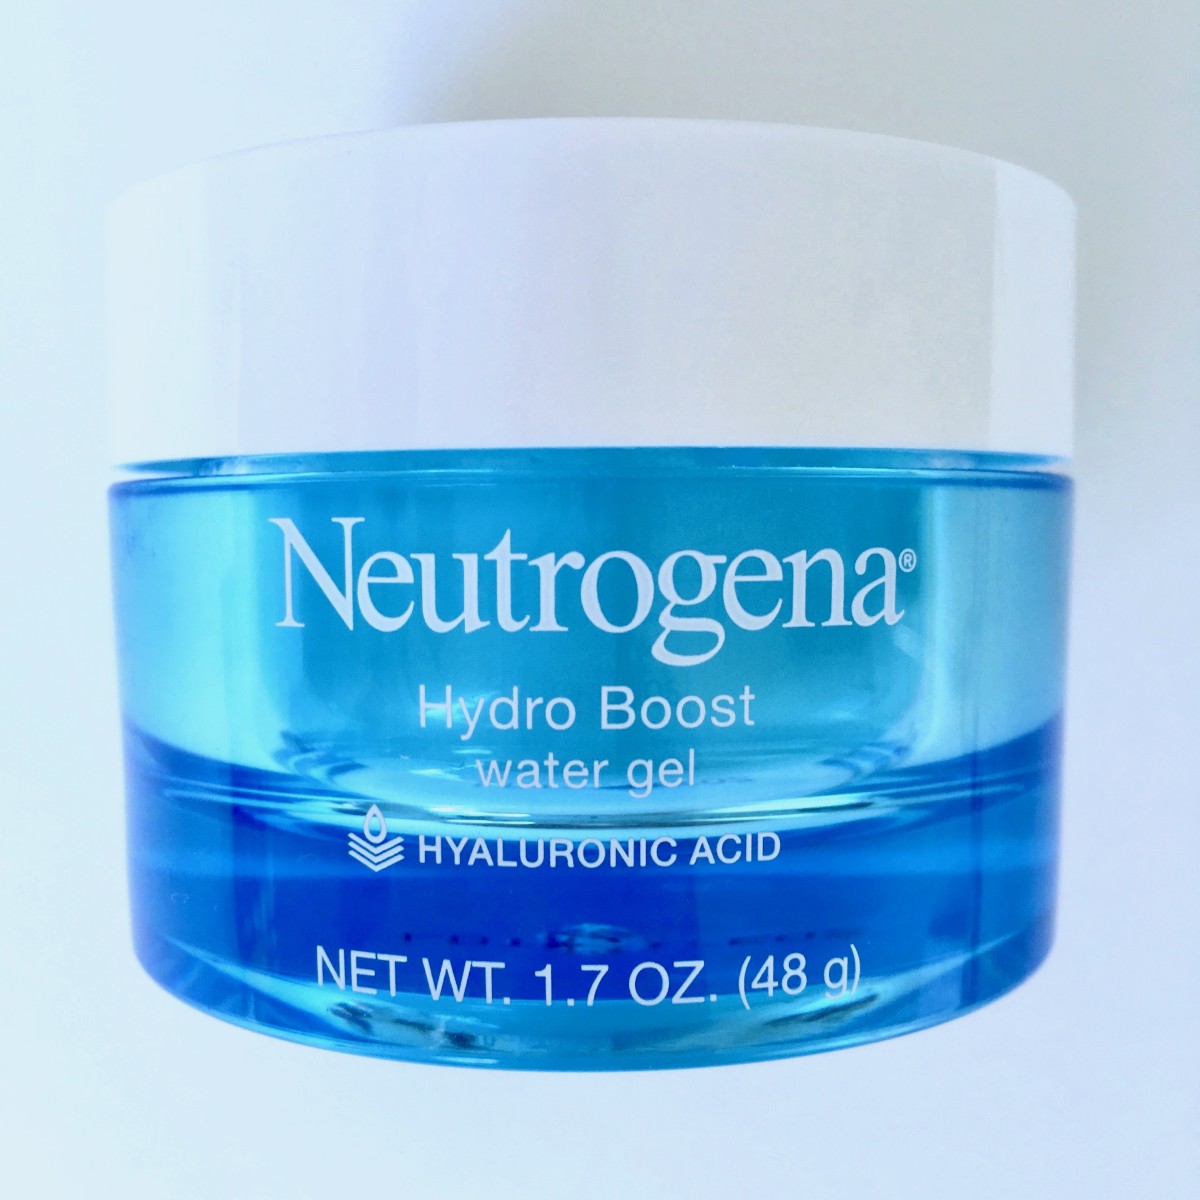 Neutrogena Hydro Boost Water Gel Moisturizer